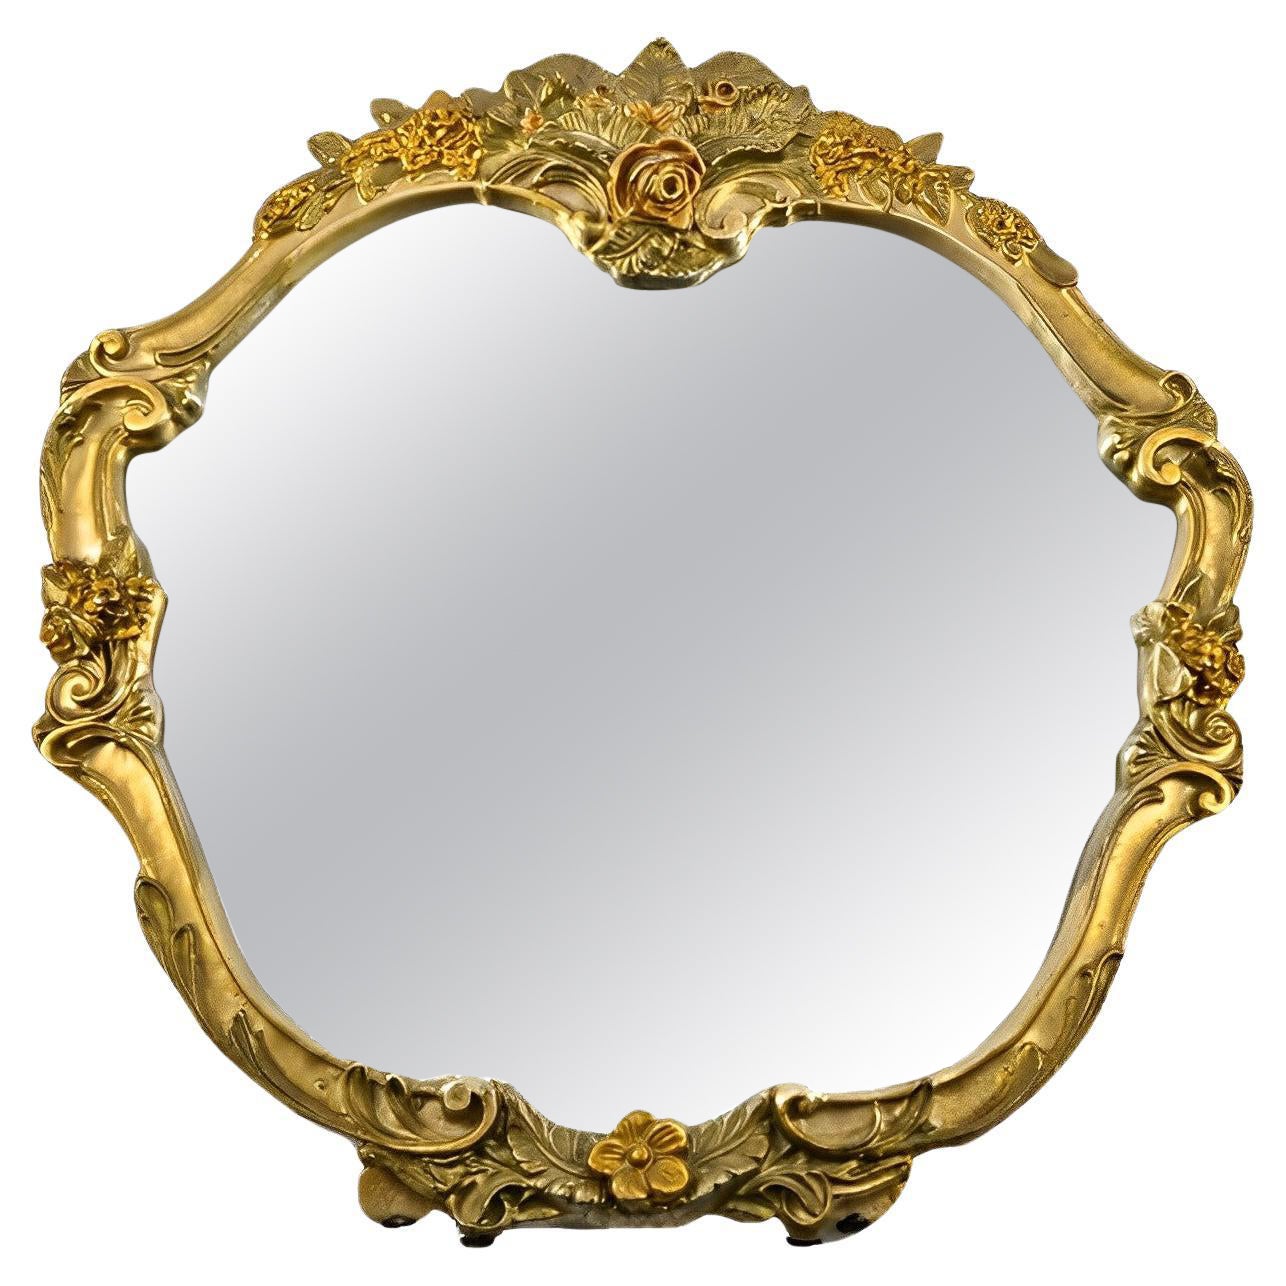 Rococo Revival Table Mirrors